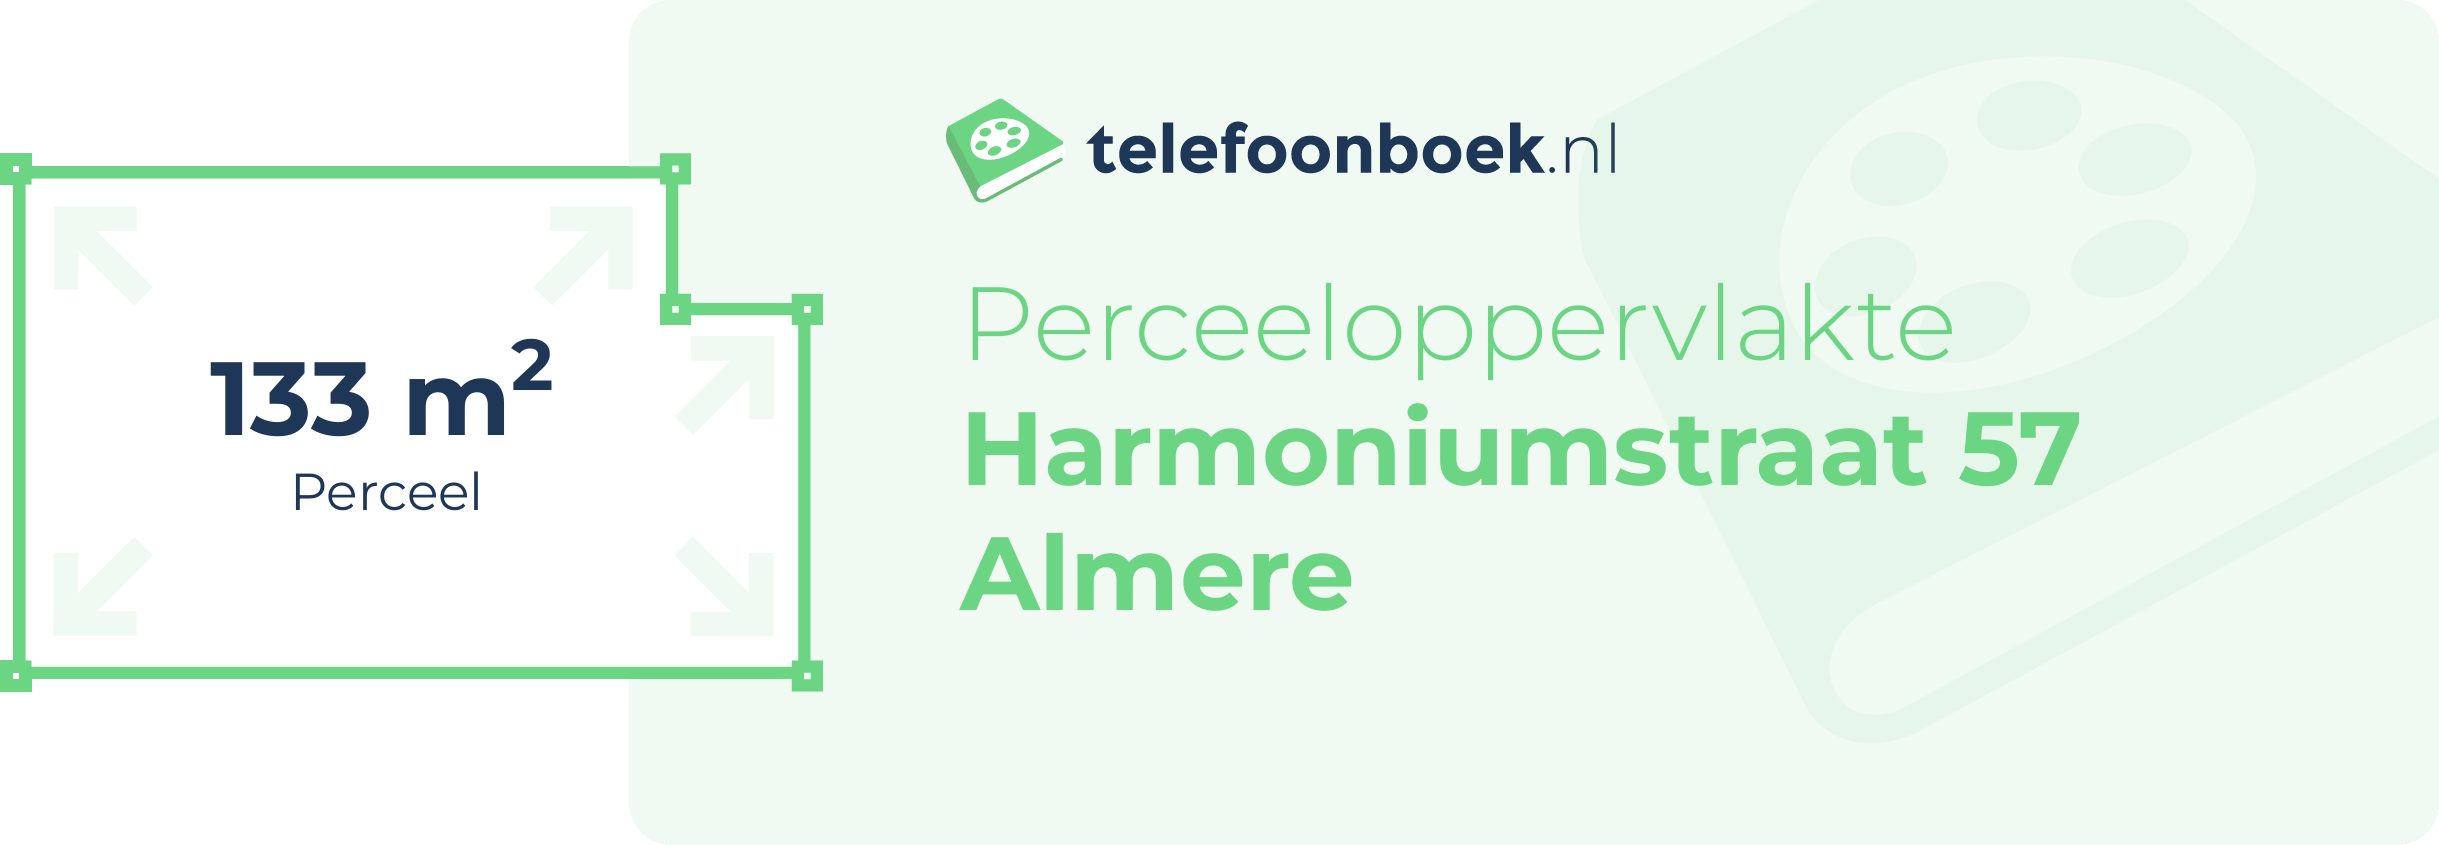 Perceeloppervlakte Harmoniumstraat 57 Almere